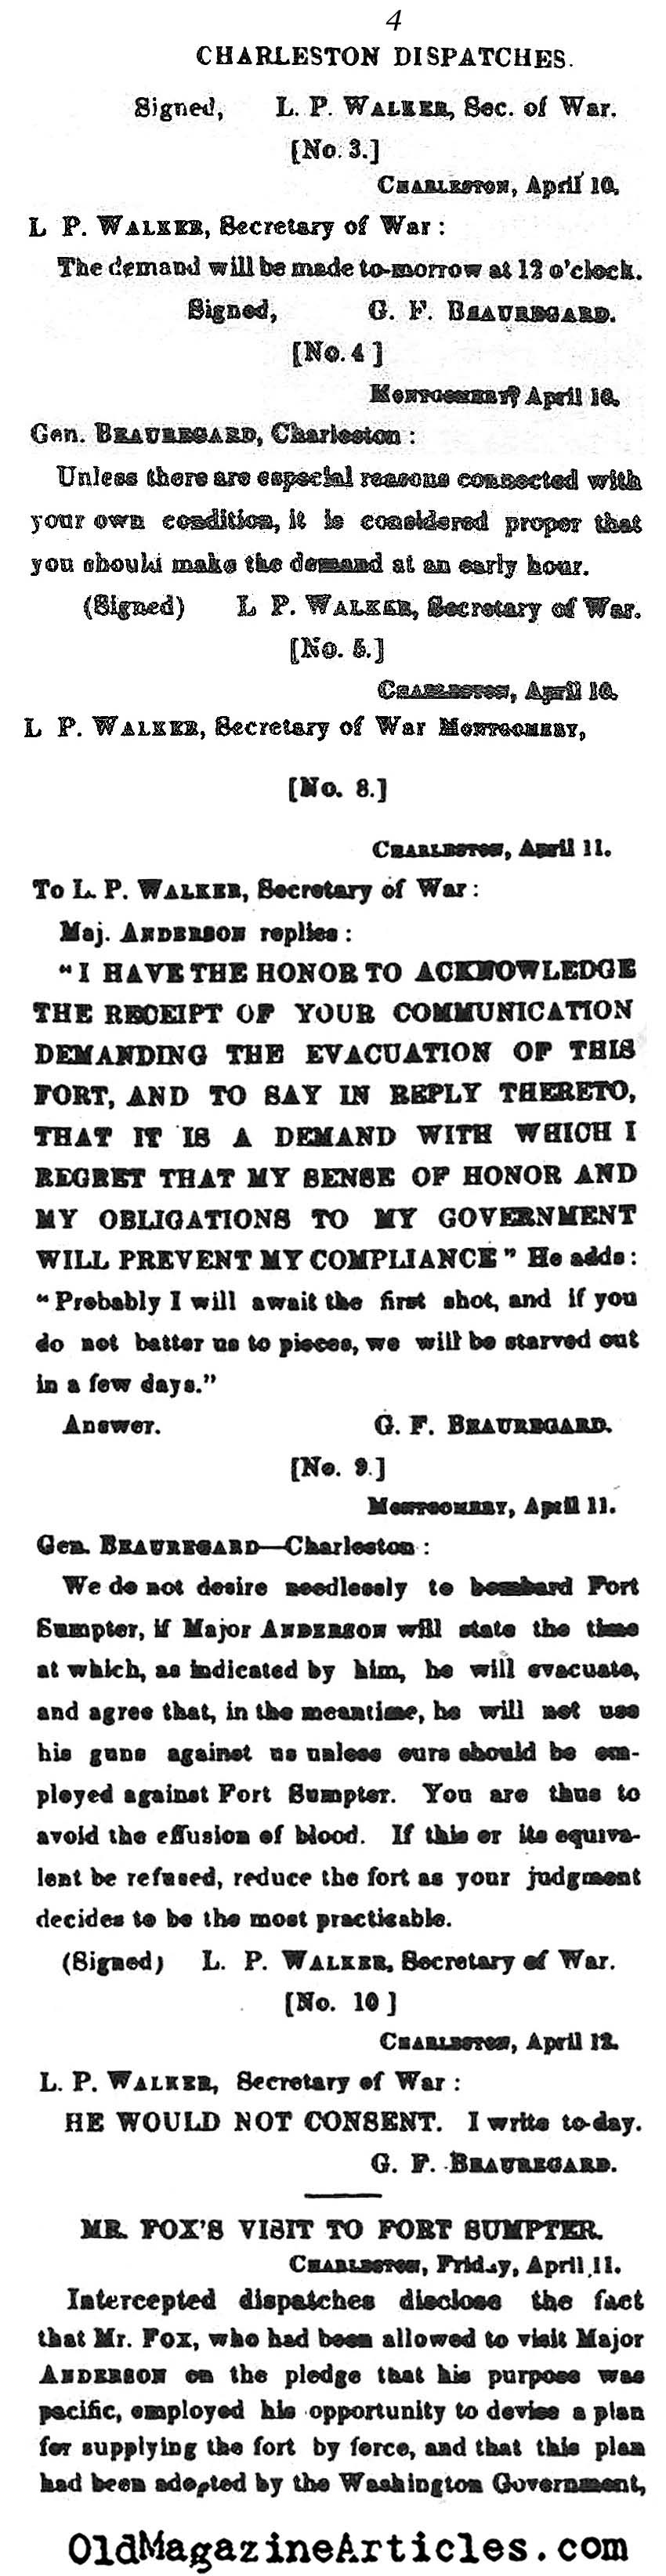 The Civil War Begins (NY Times, 1861)